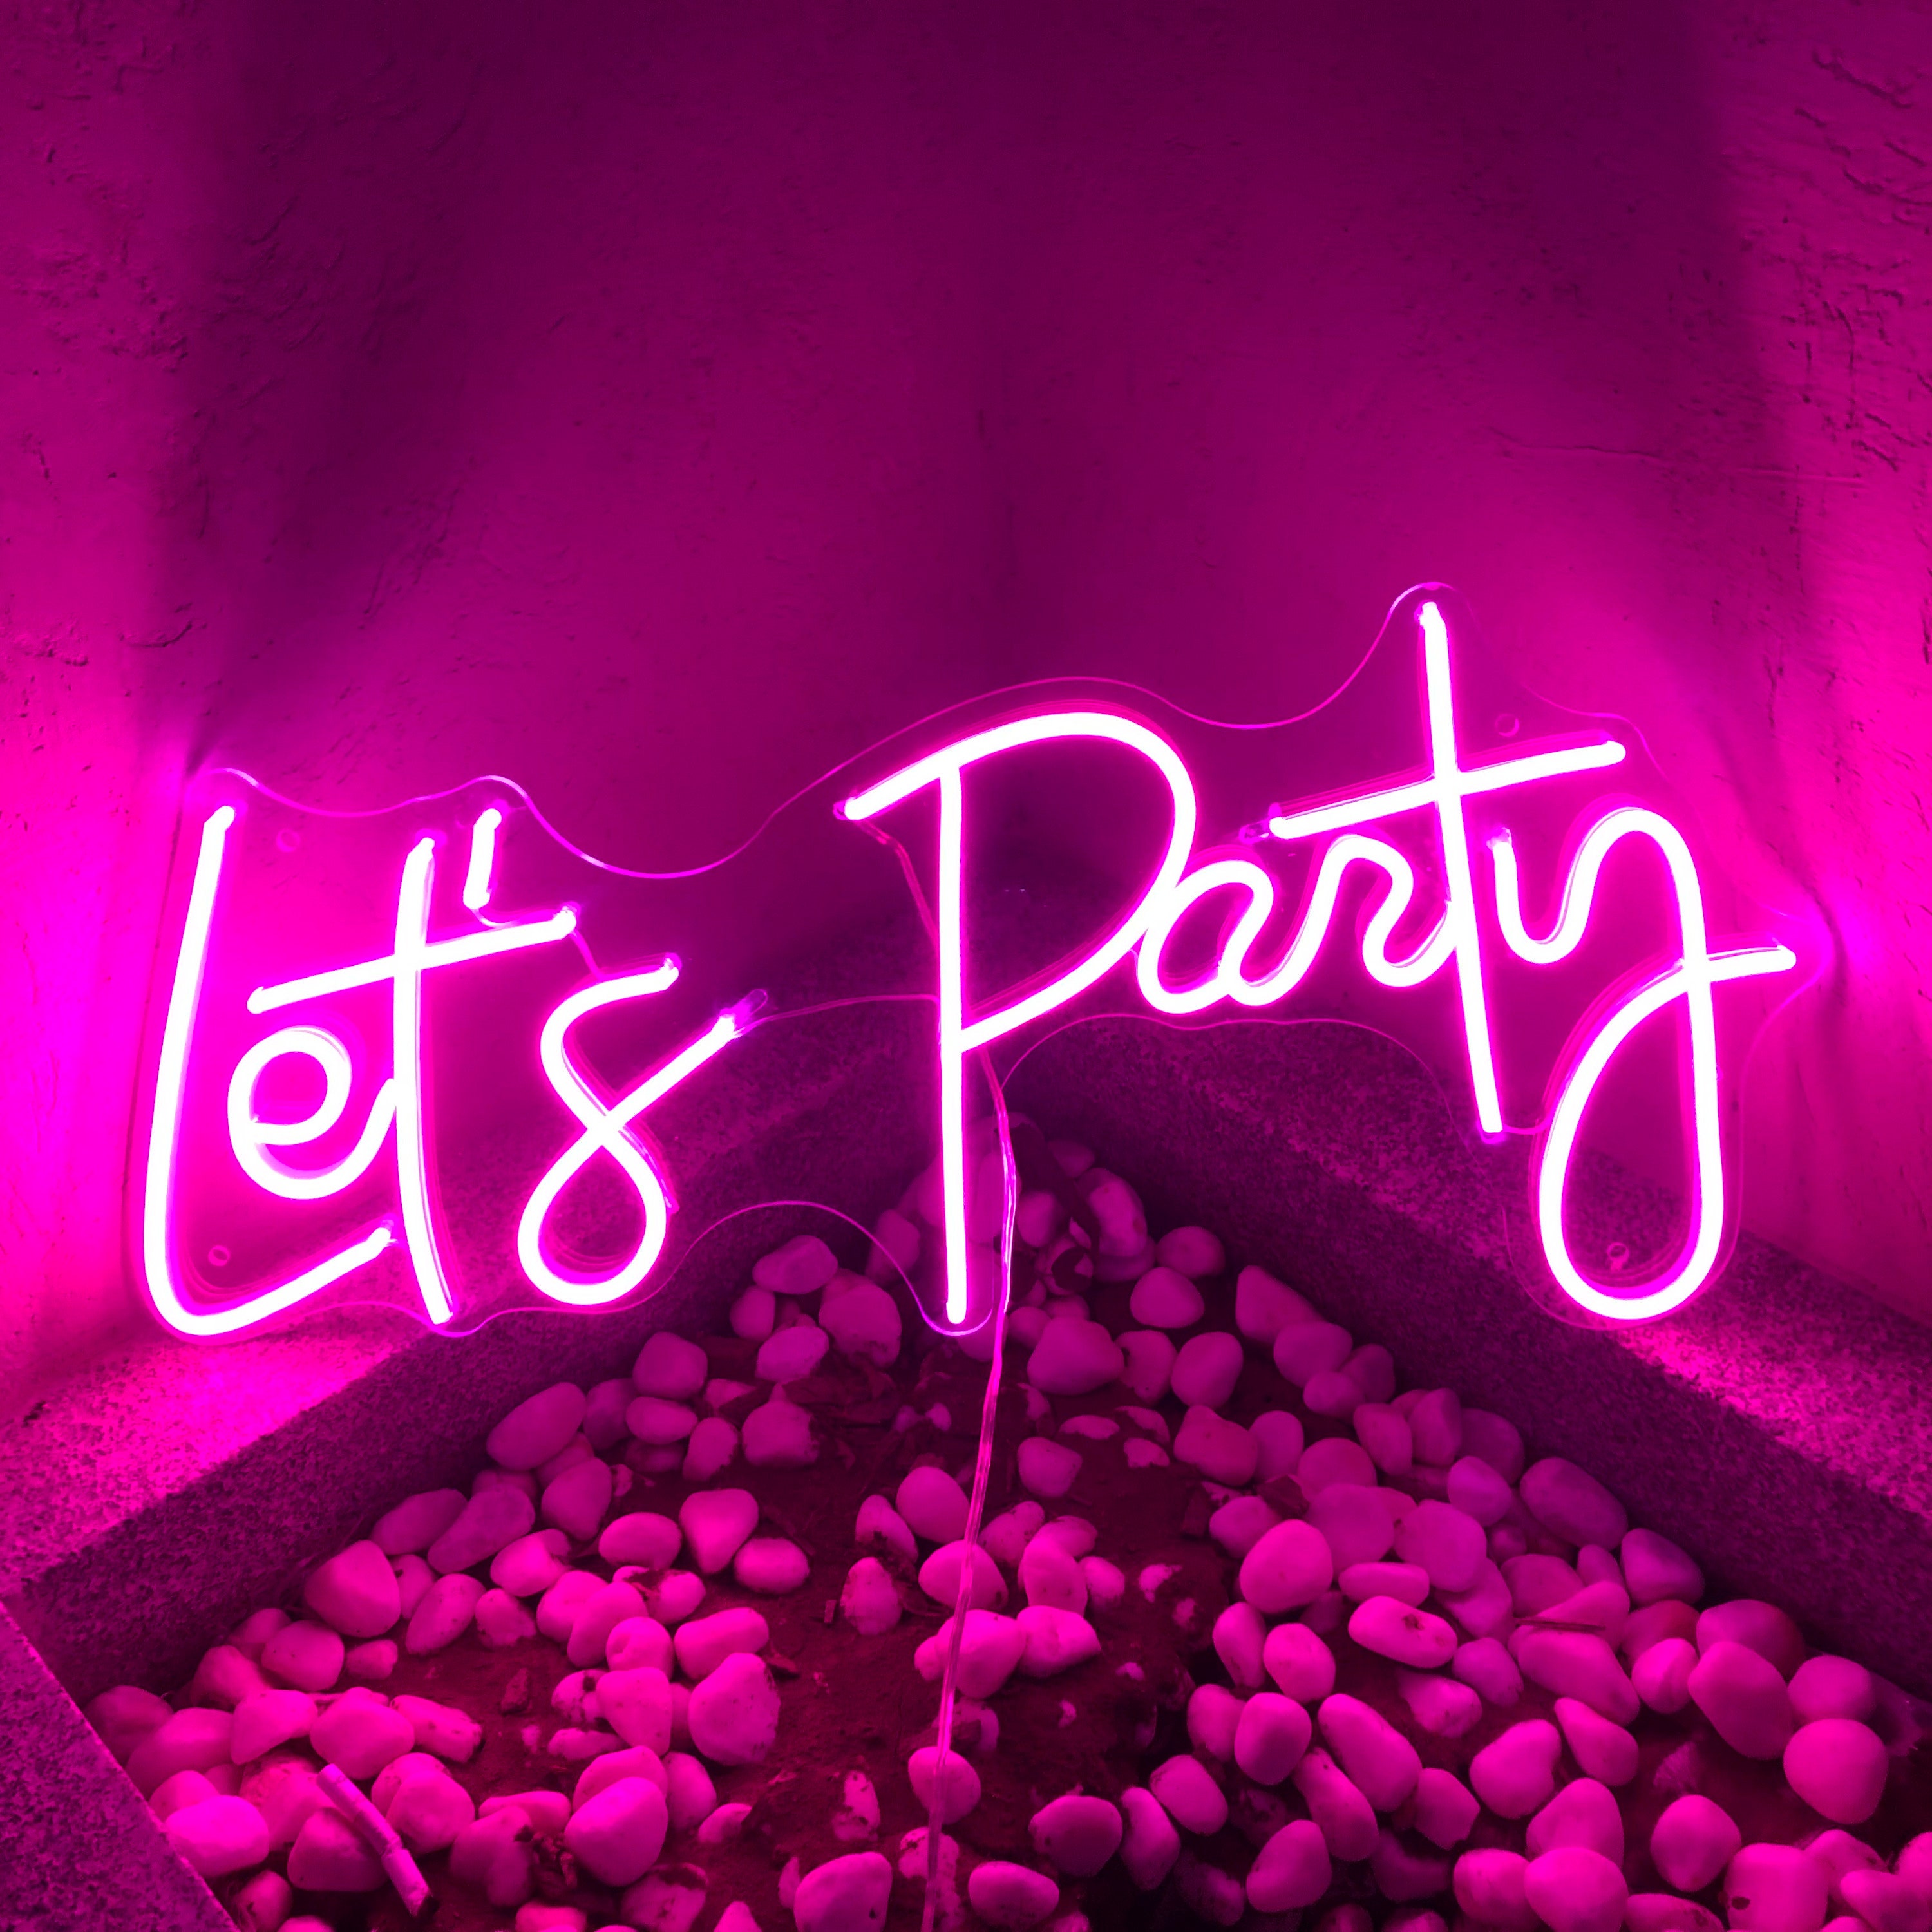 Let's Party Neon Sign Flex Led Neon Light Sign Custom | Etsy